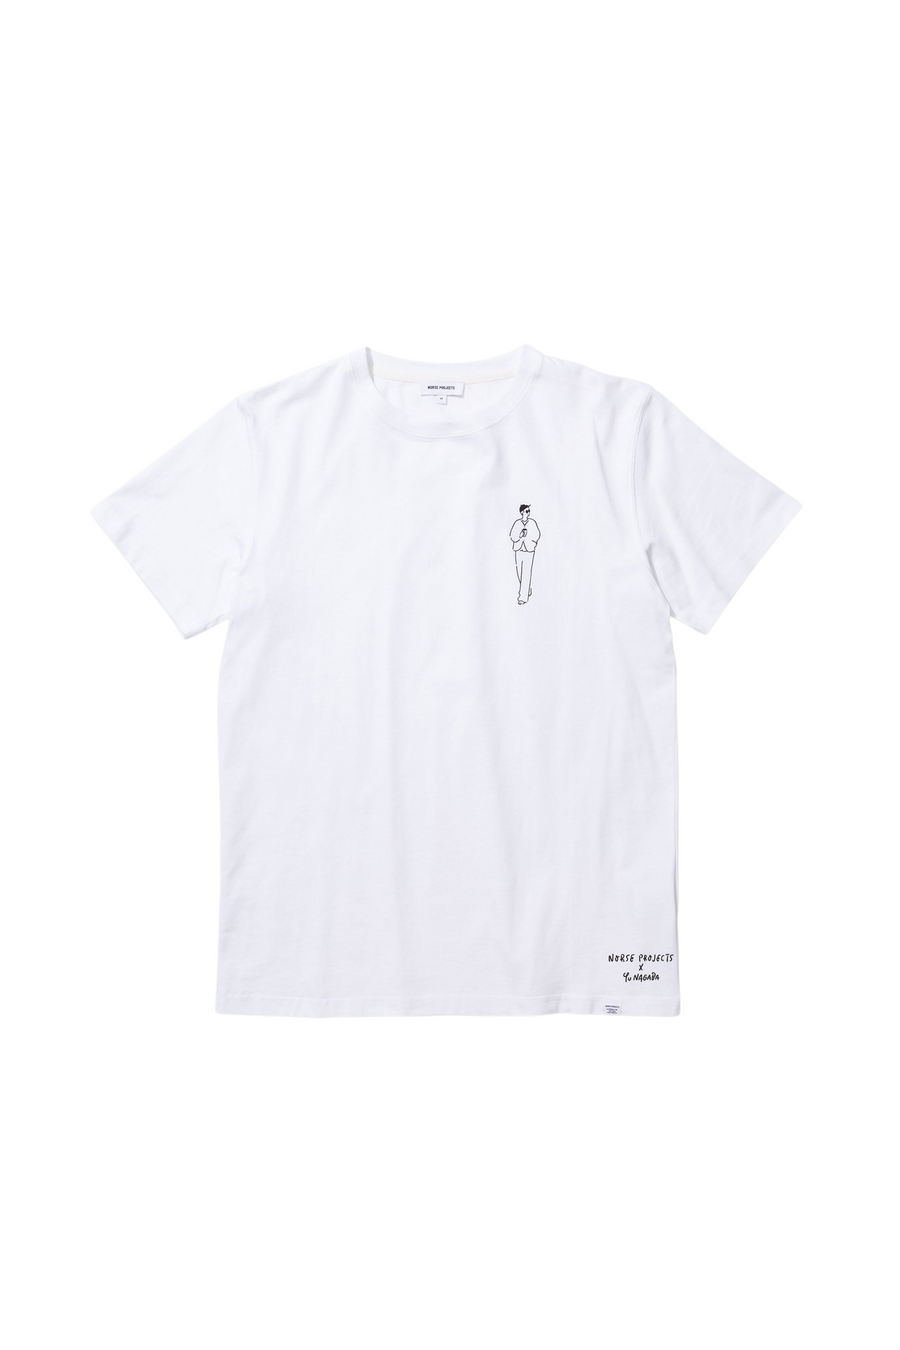 Niels Norse x Yu Nagaba T-shirt White